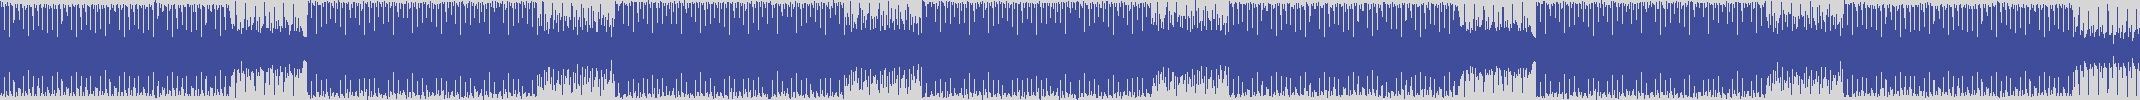 nf_boyz_records [NFY054] Meta Bolik - Bionick [Grooving] audio wave form